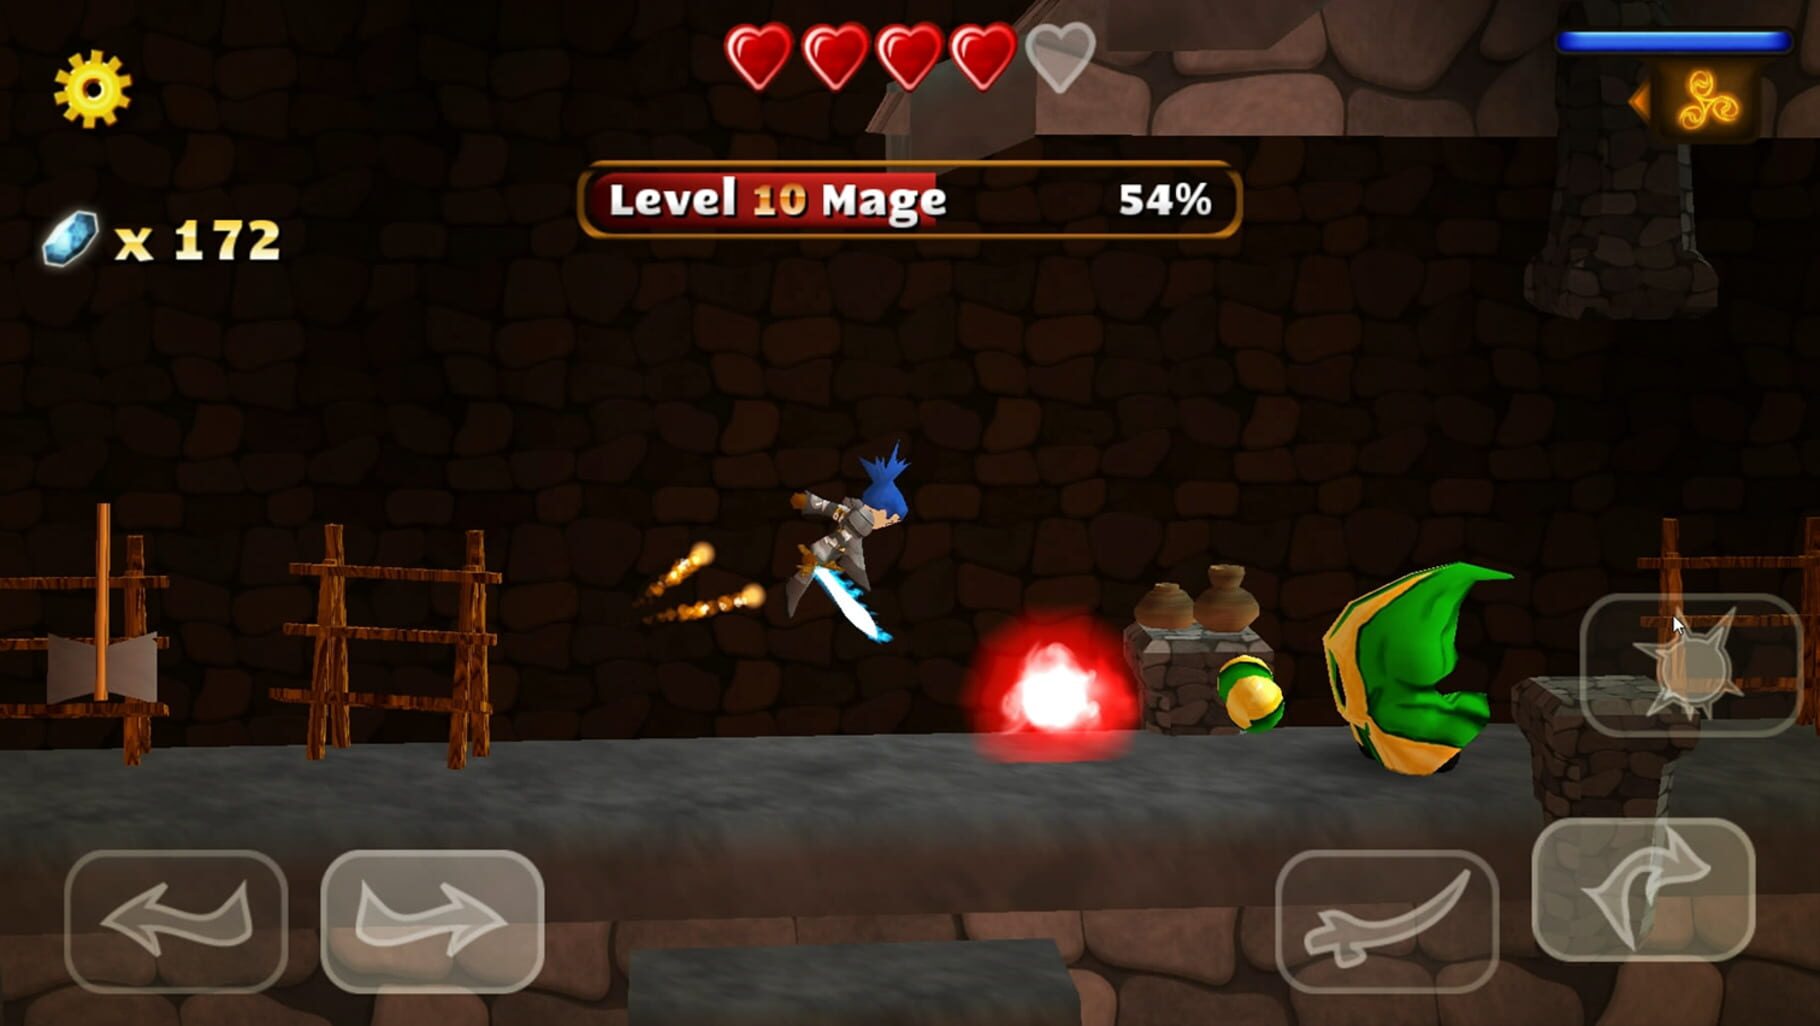 Swordigo screenshots